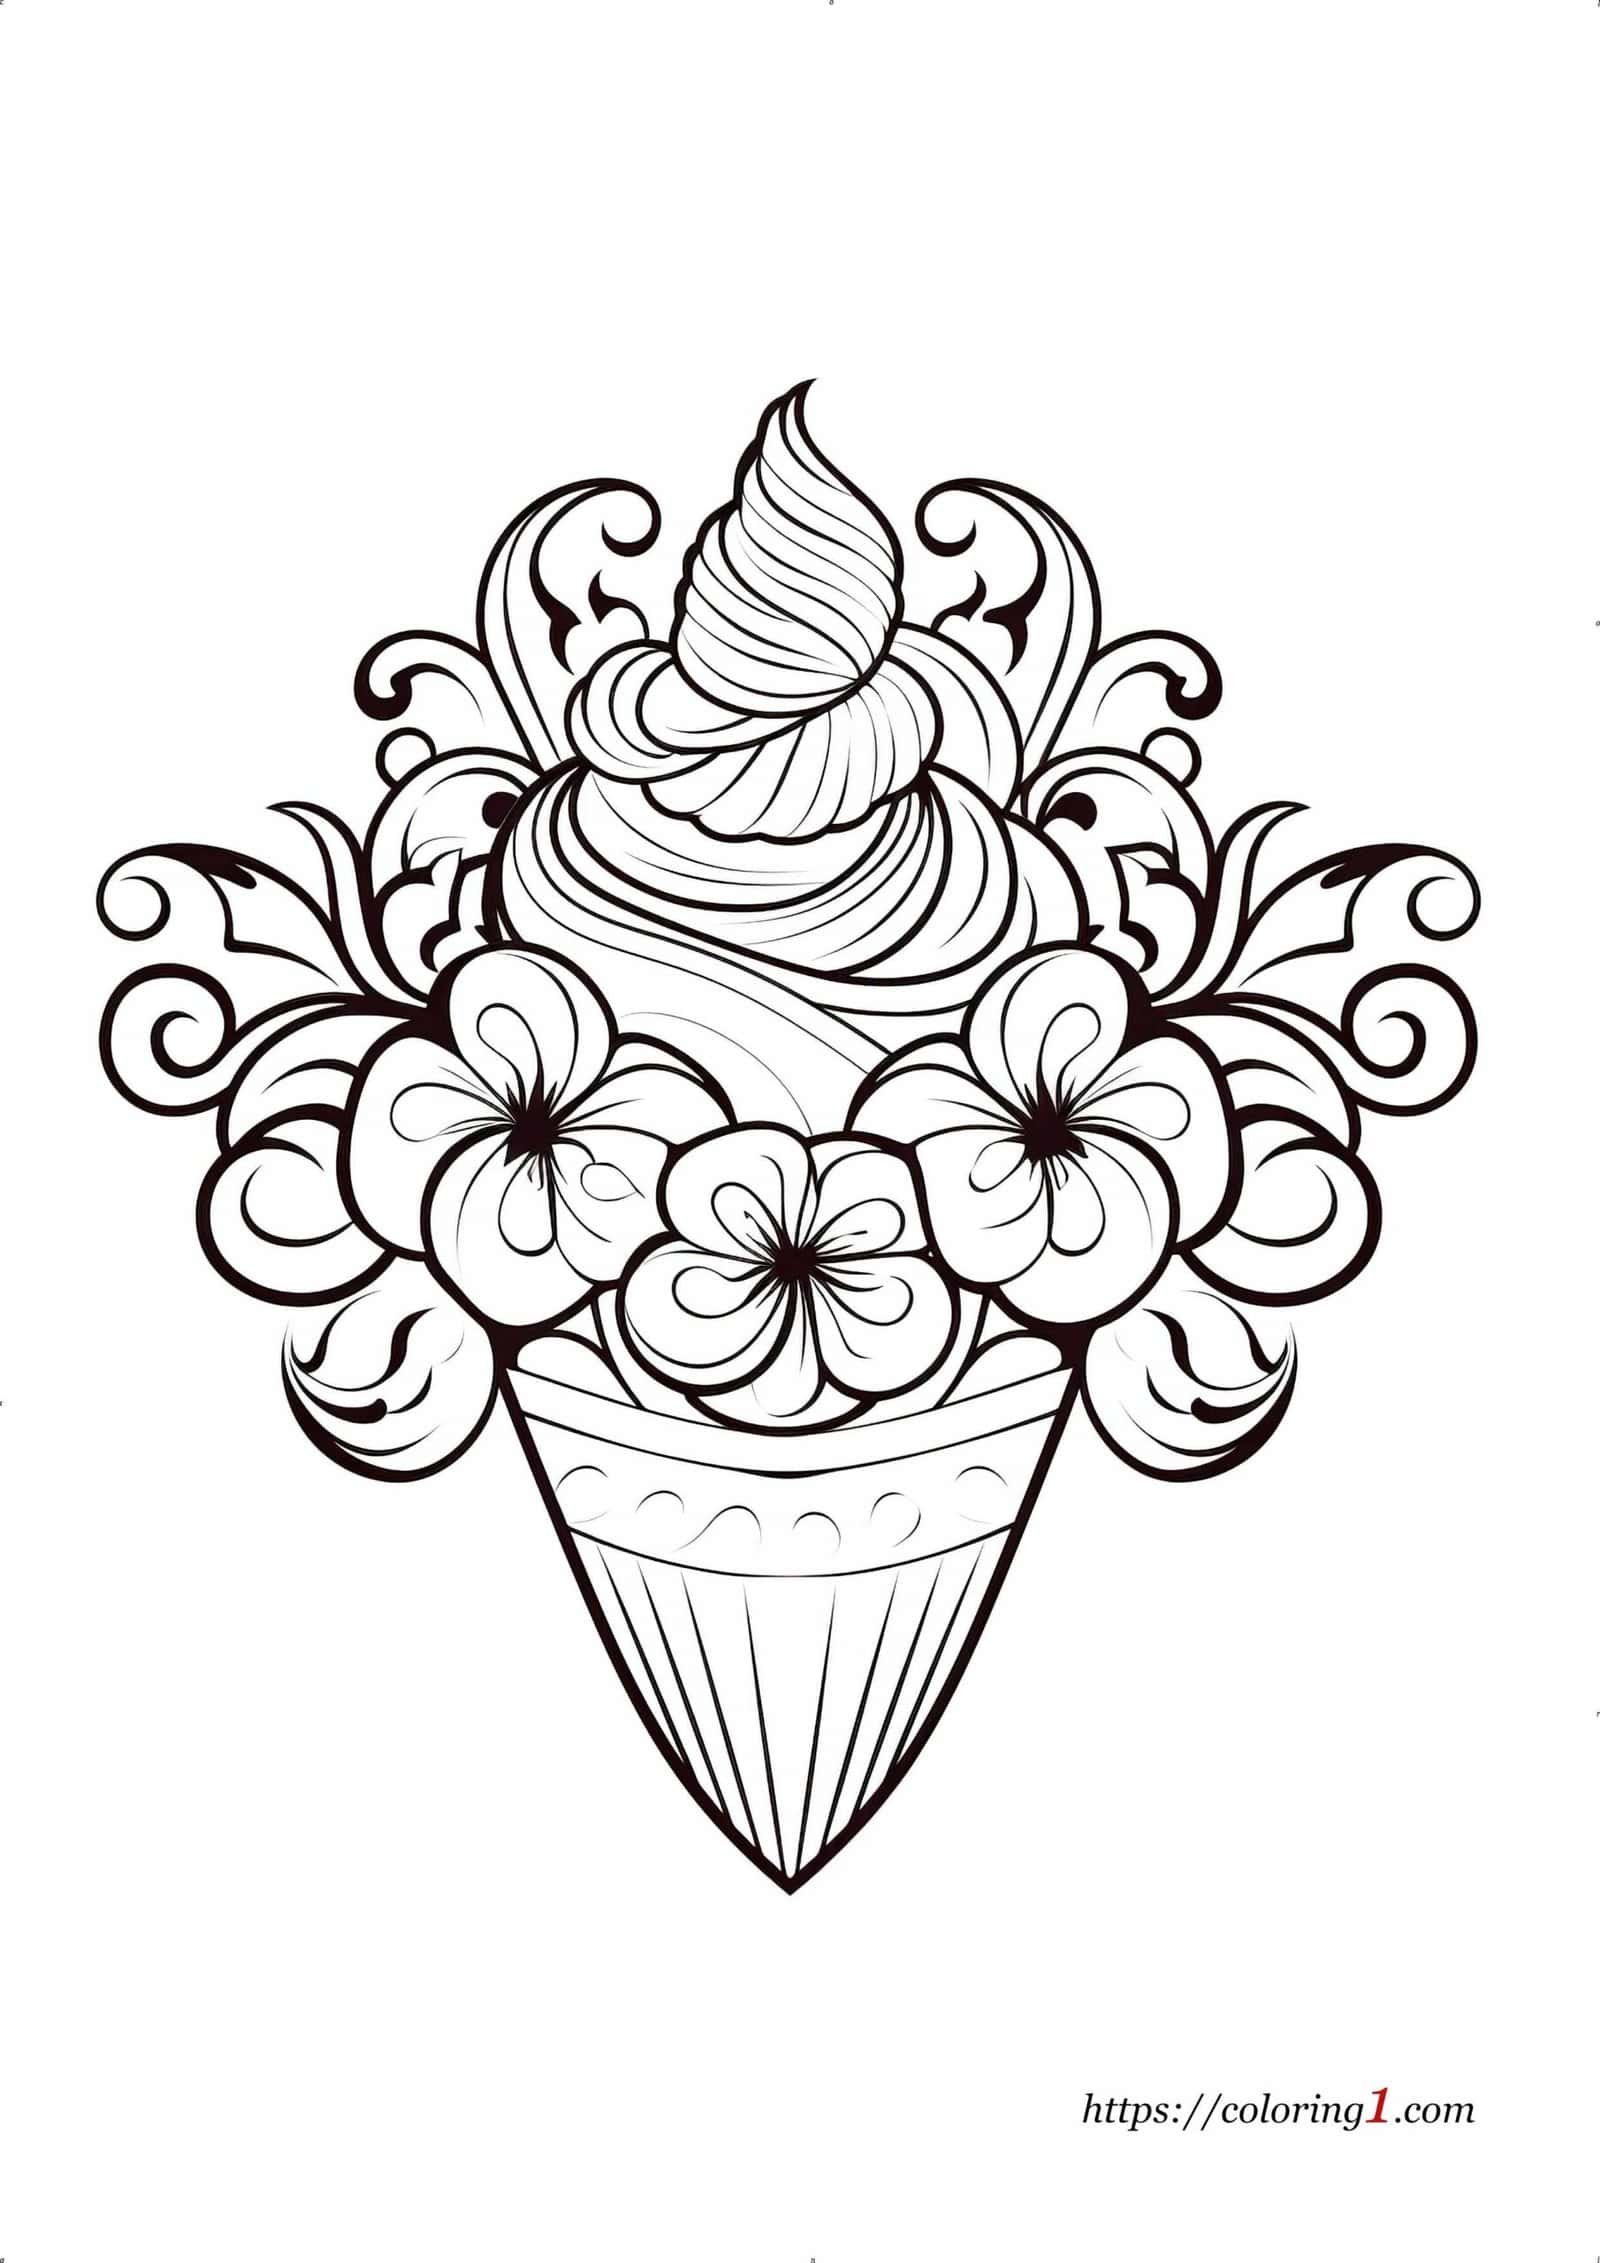 Ice Cream Mandala hard coloring page to print